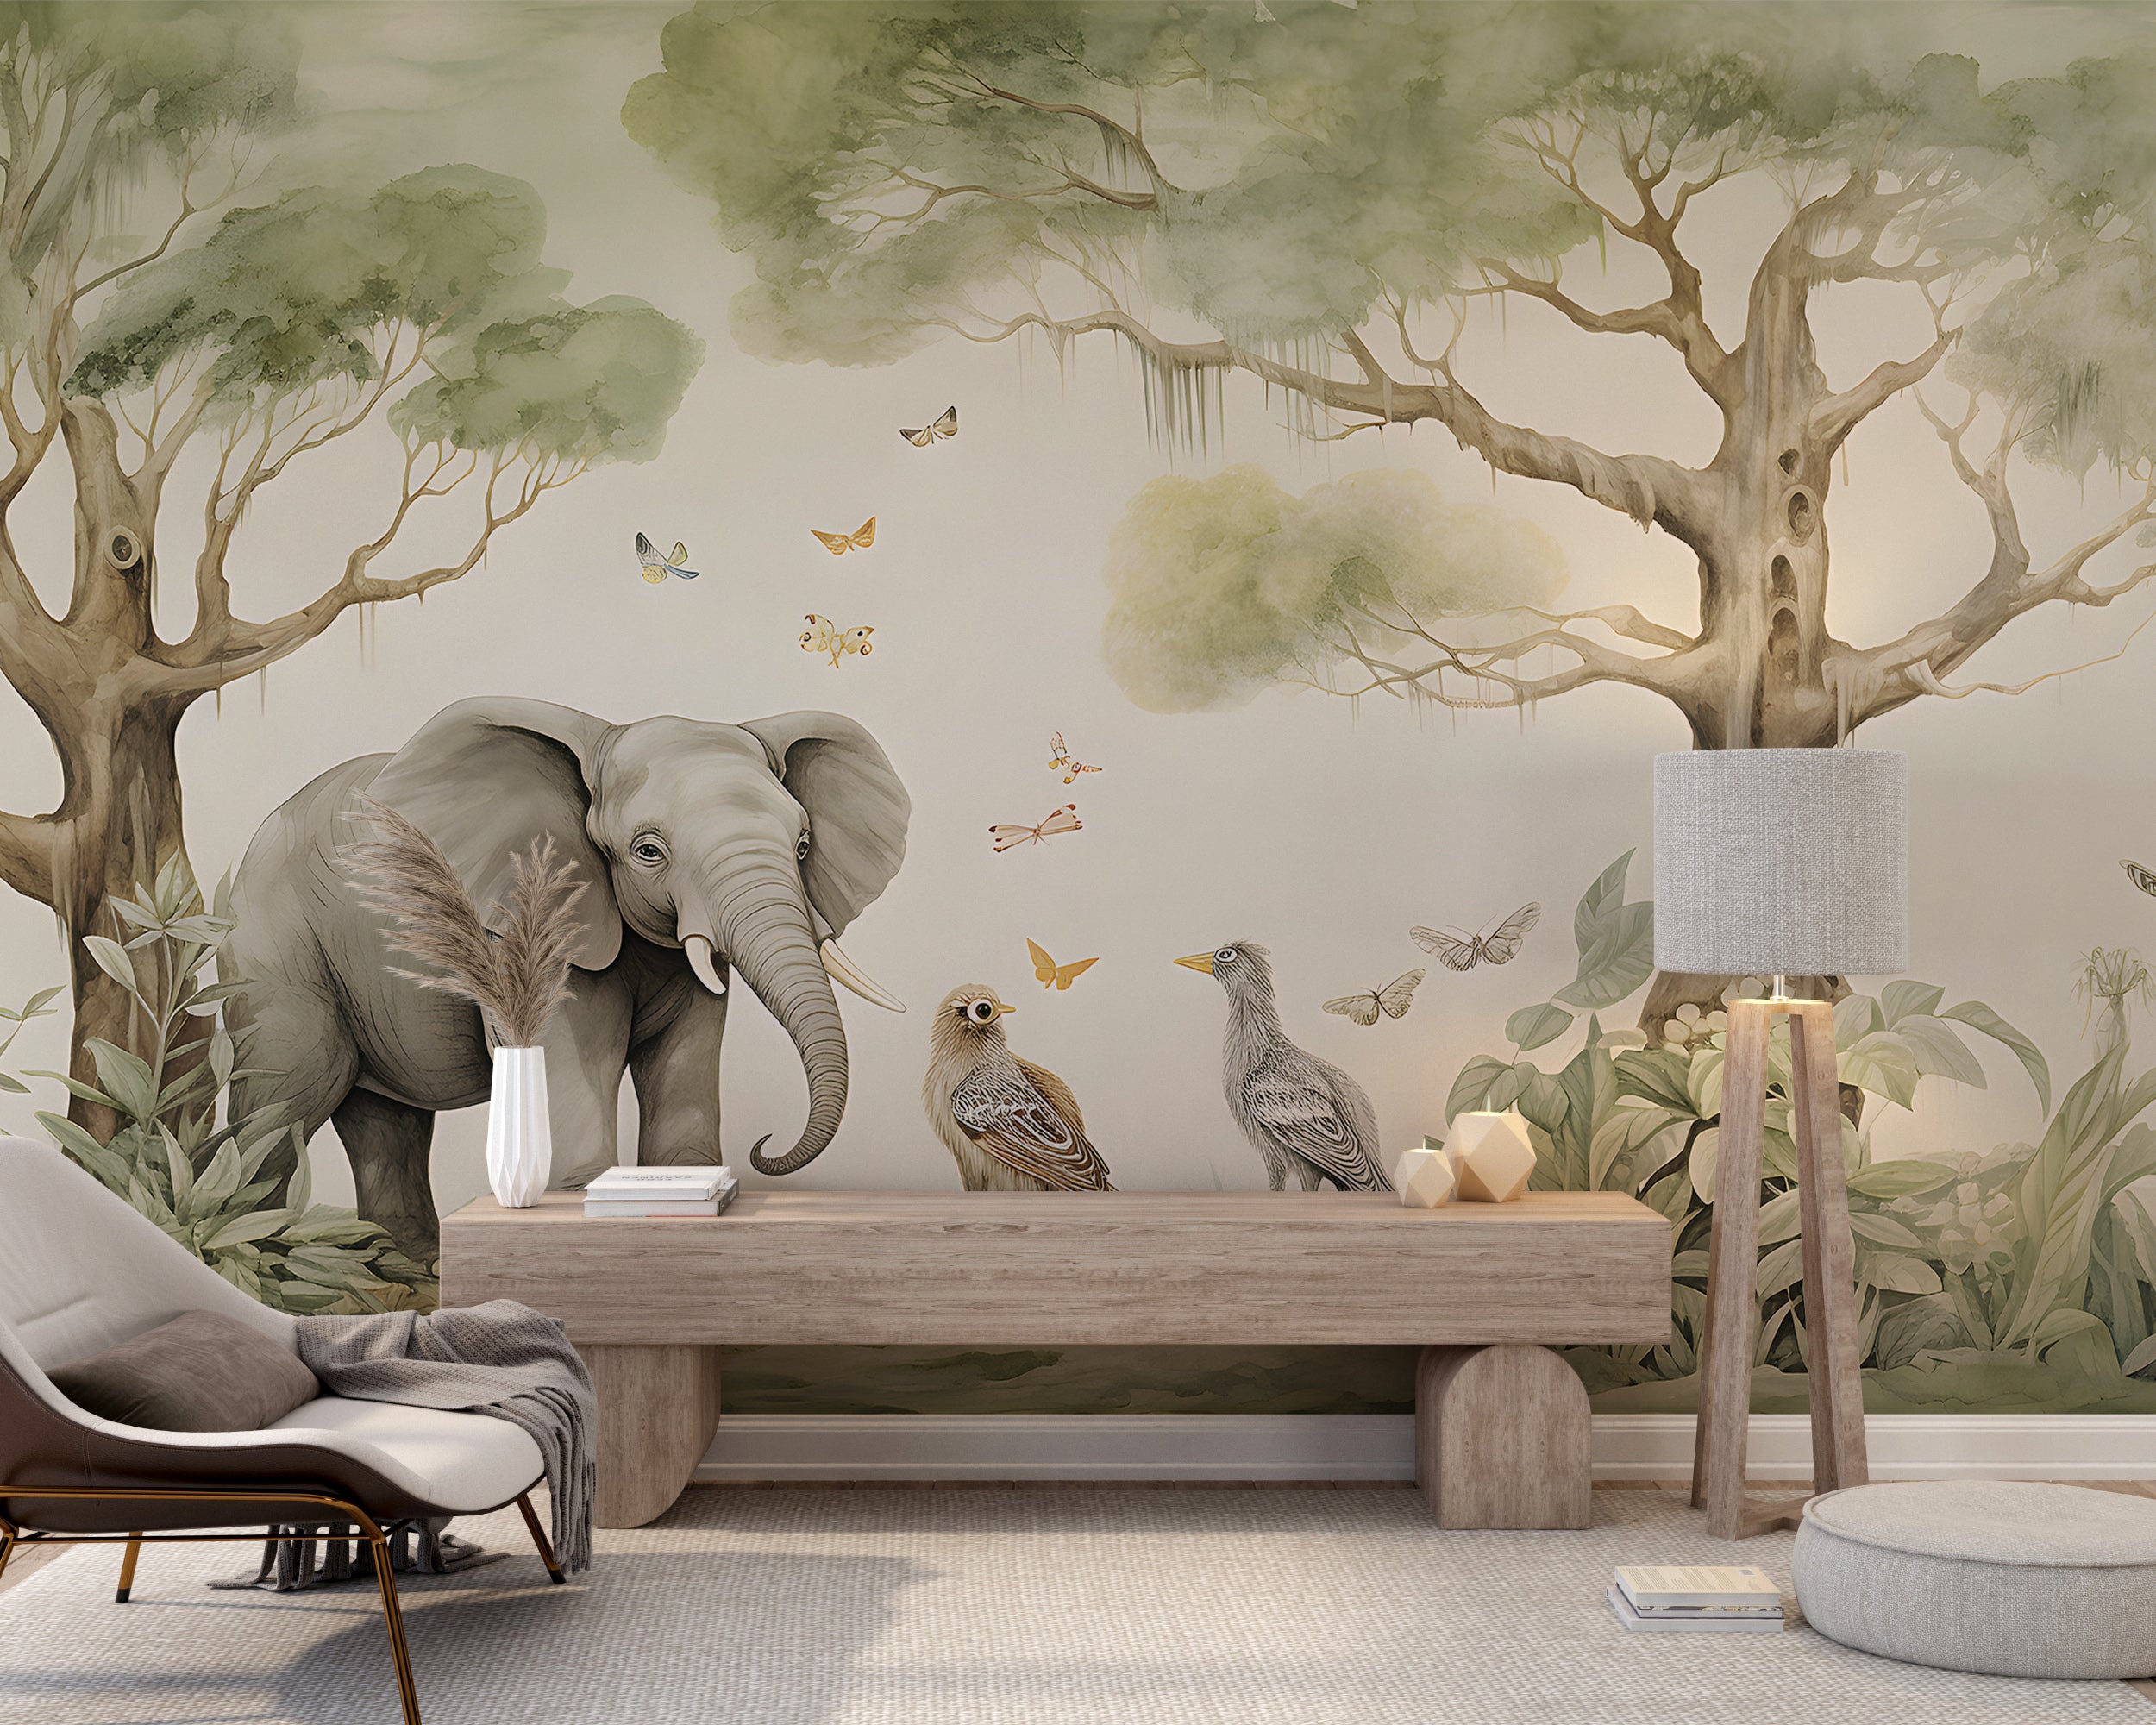 Jungle Safari Elephant Wall Decoration